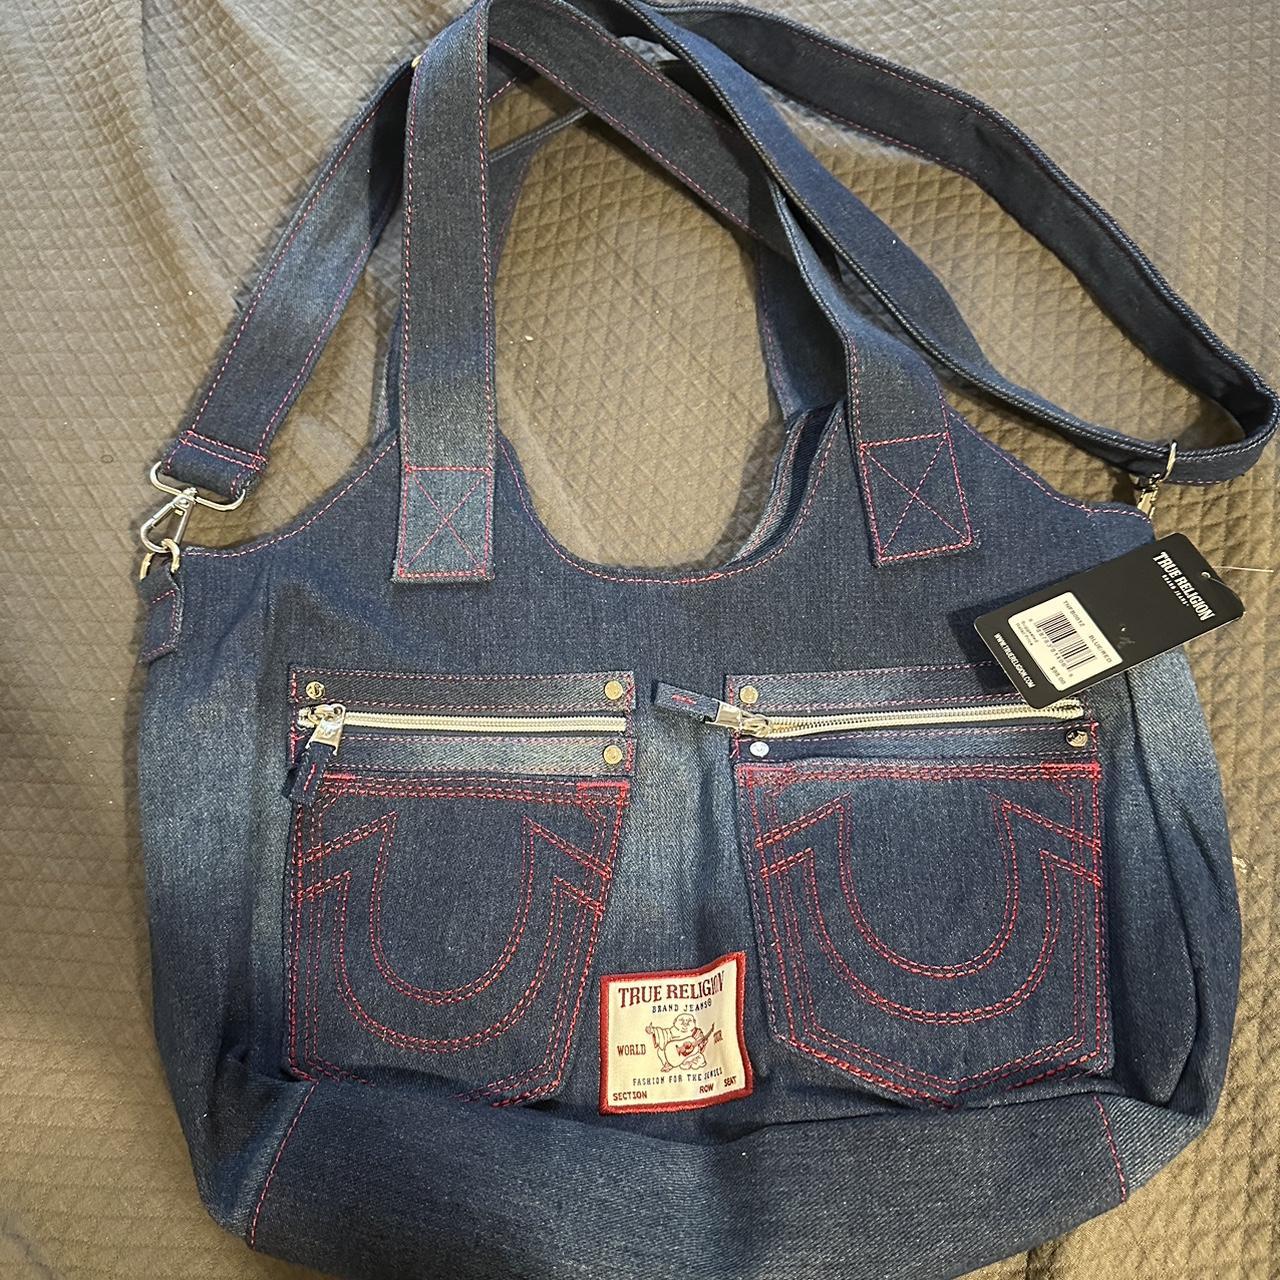 Amazon.com: True Religion Crossbody Bag, Women's Small Purse Handbag with  Adjustable Strap, Denim : ביגוד, נעליים ותכשיטים